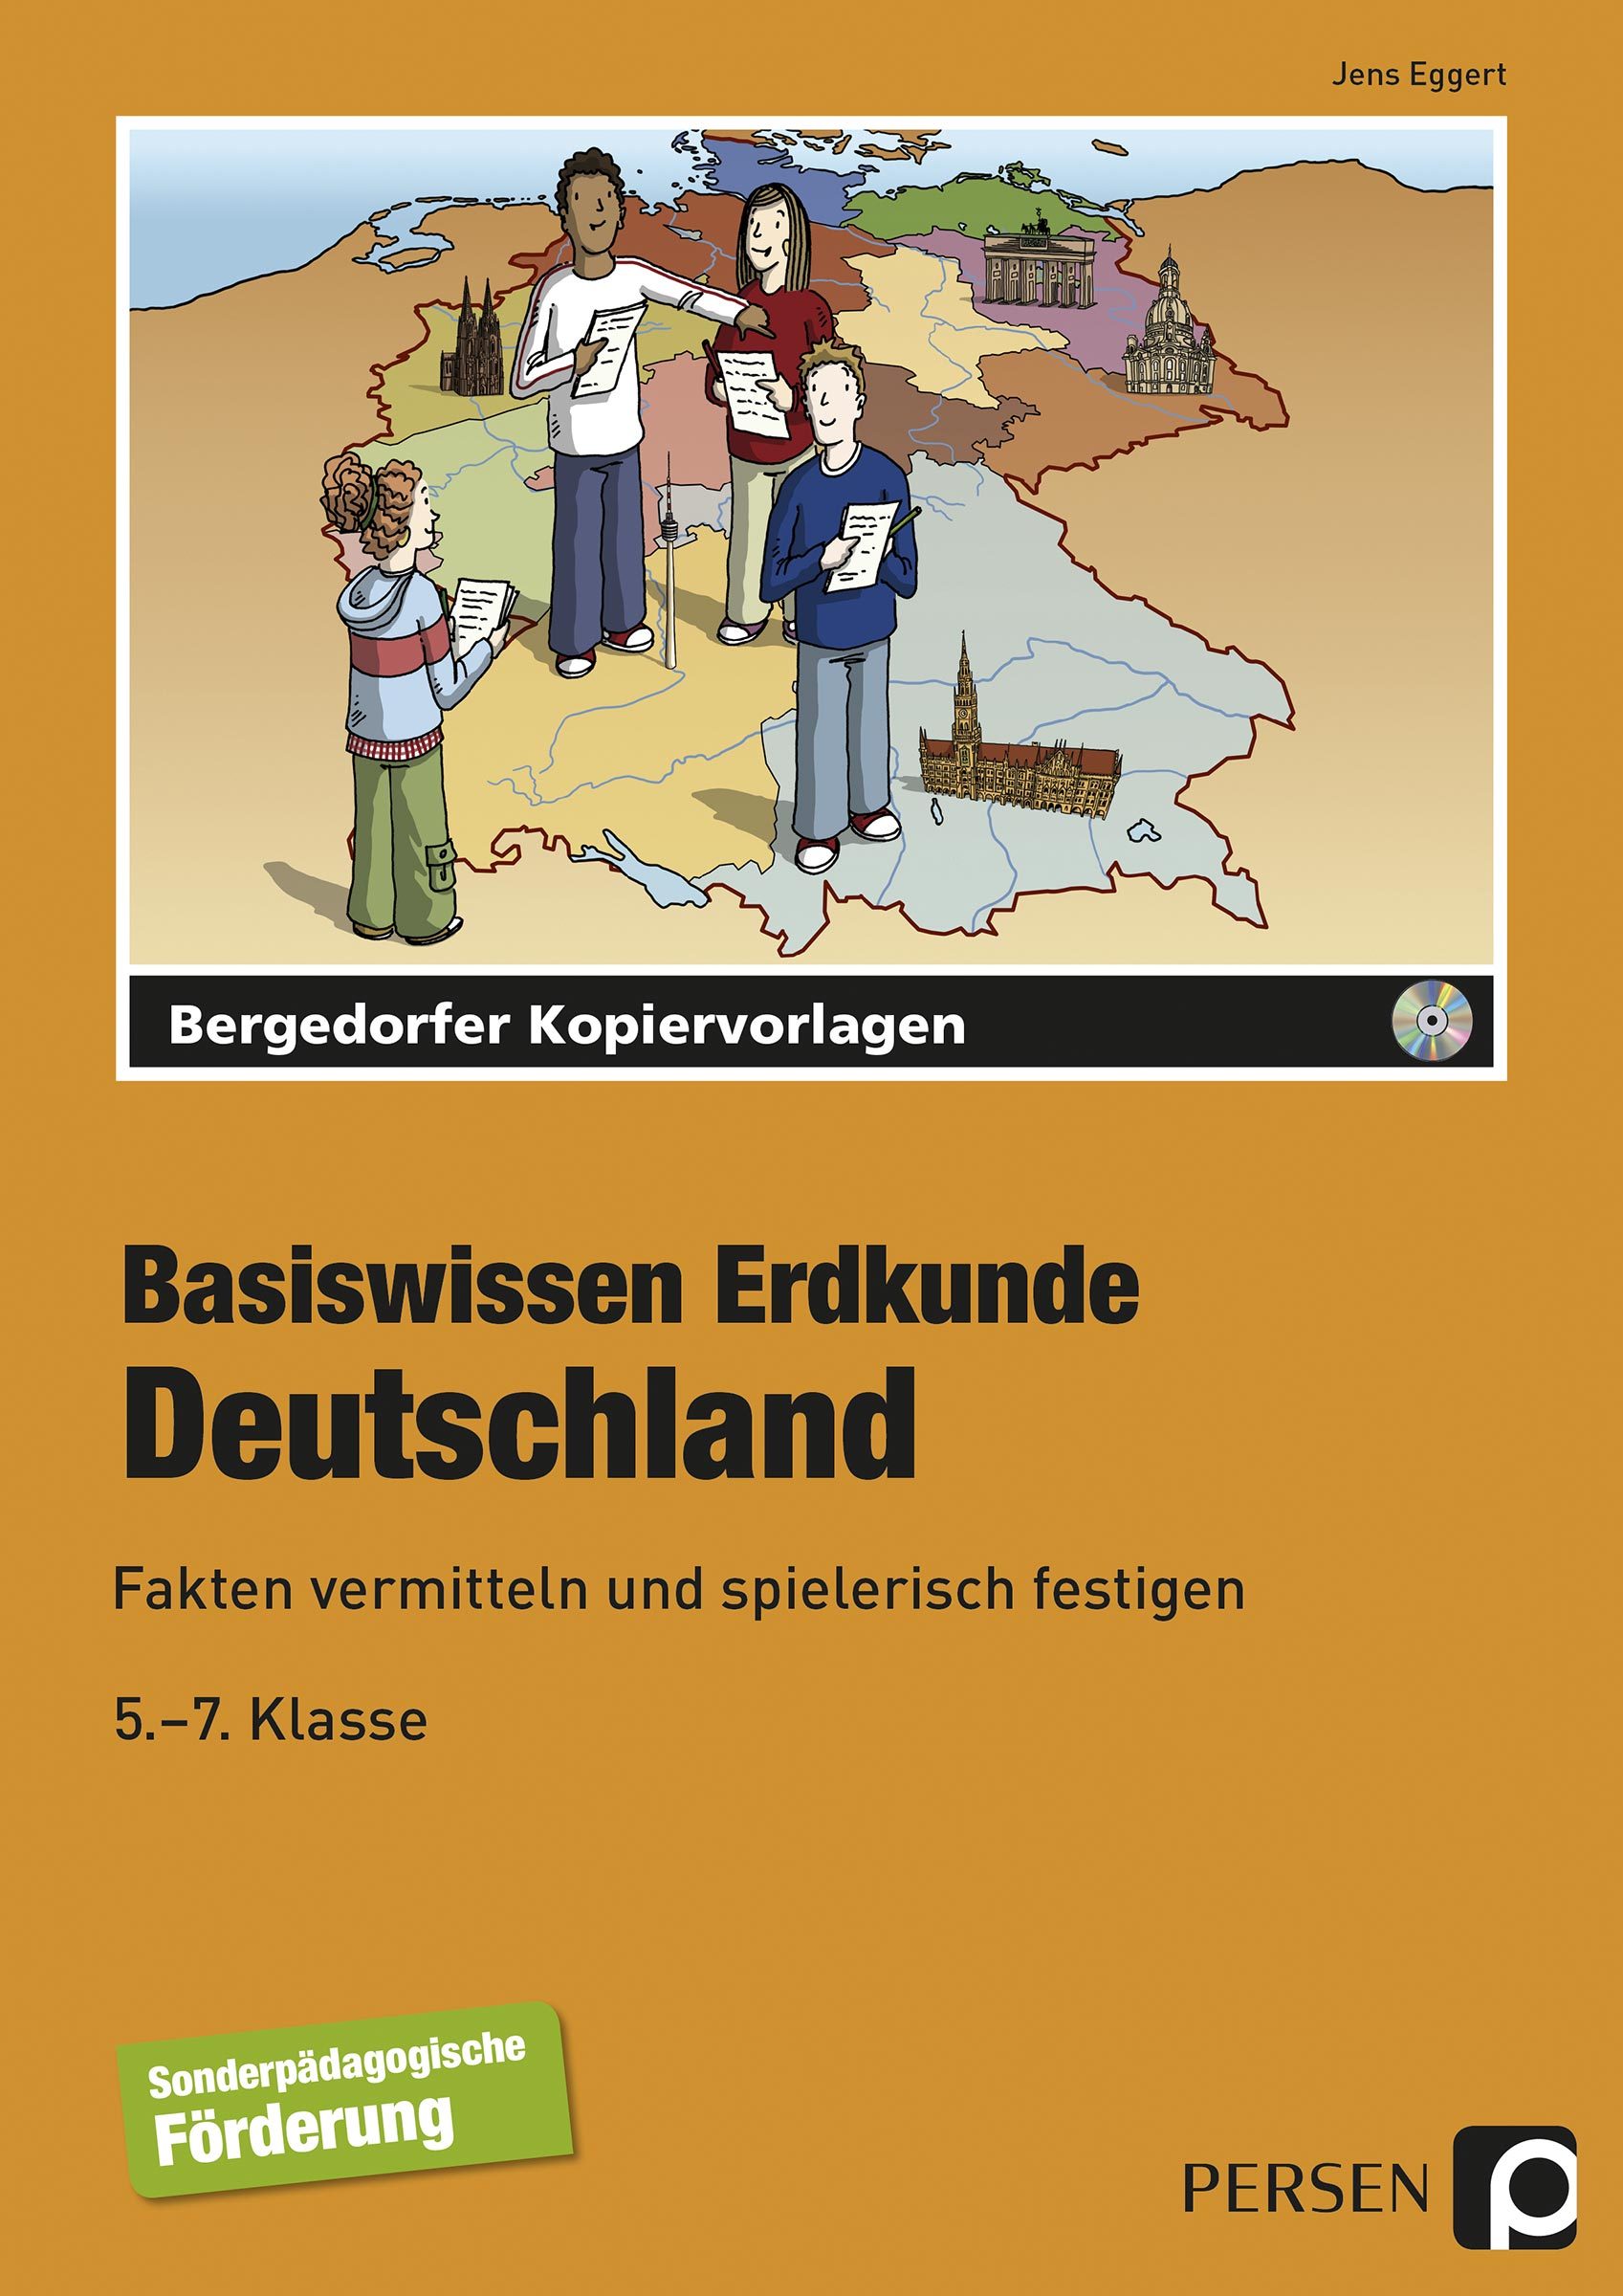 Basiswissen Erdkunde: Deutschland, Kopiervorlagen, 5.-7. Klasse kaufen